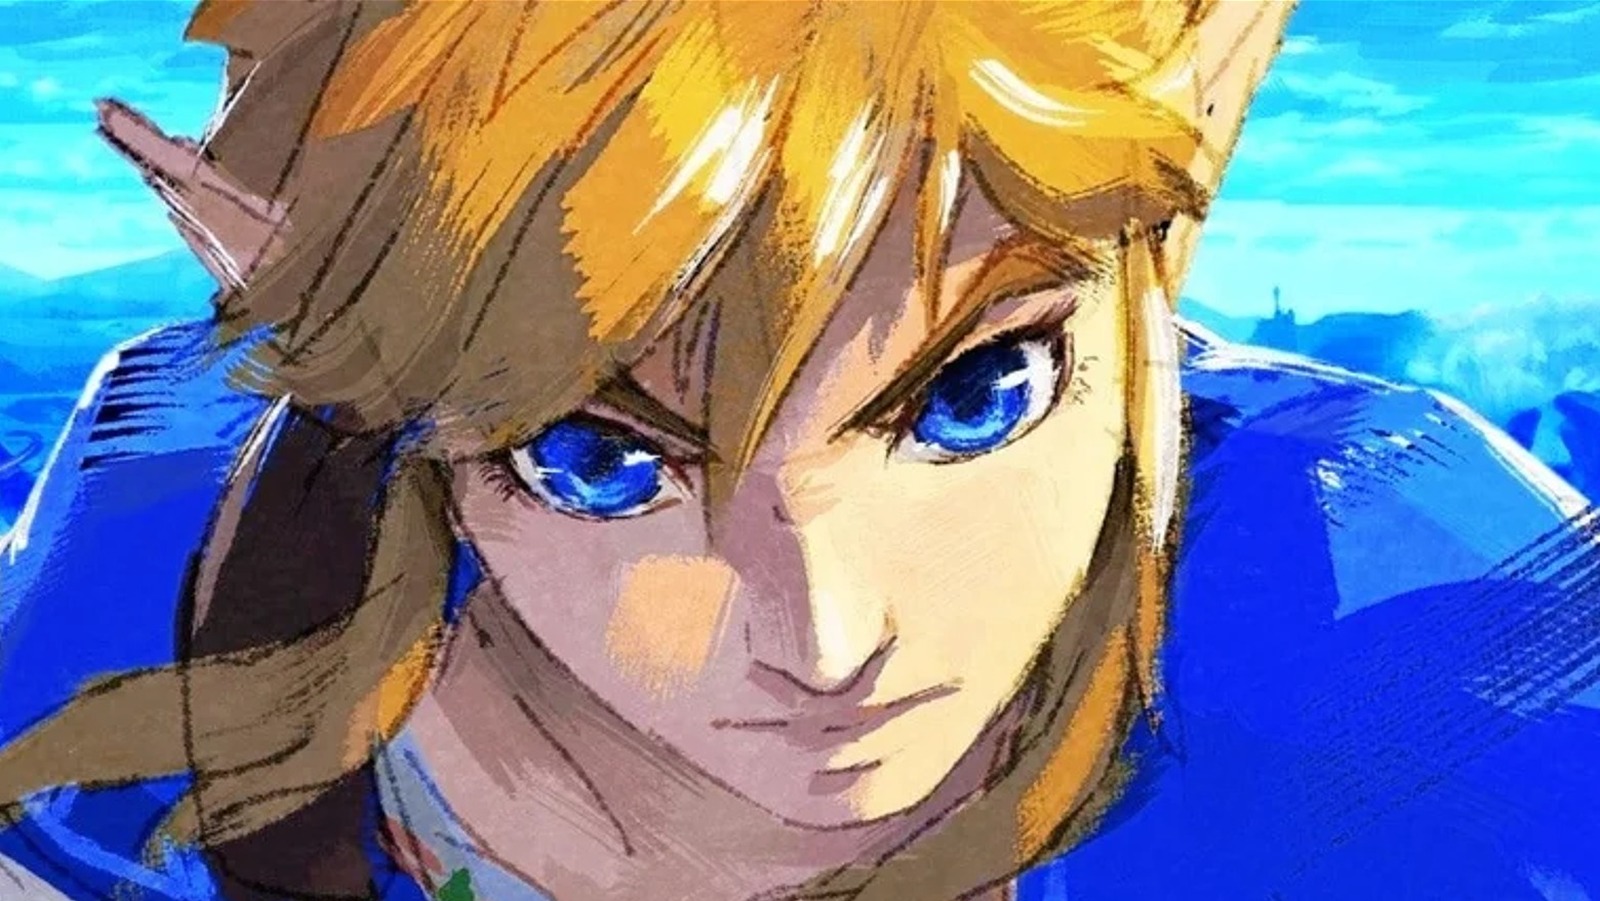 Zelda: Breath of the Wild Multiplayer Mod Revealed